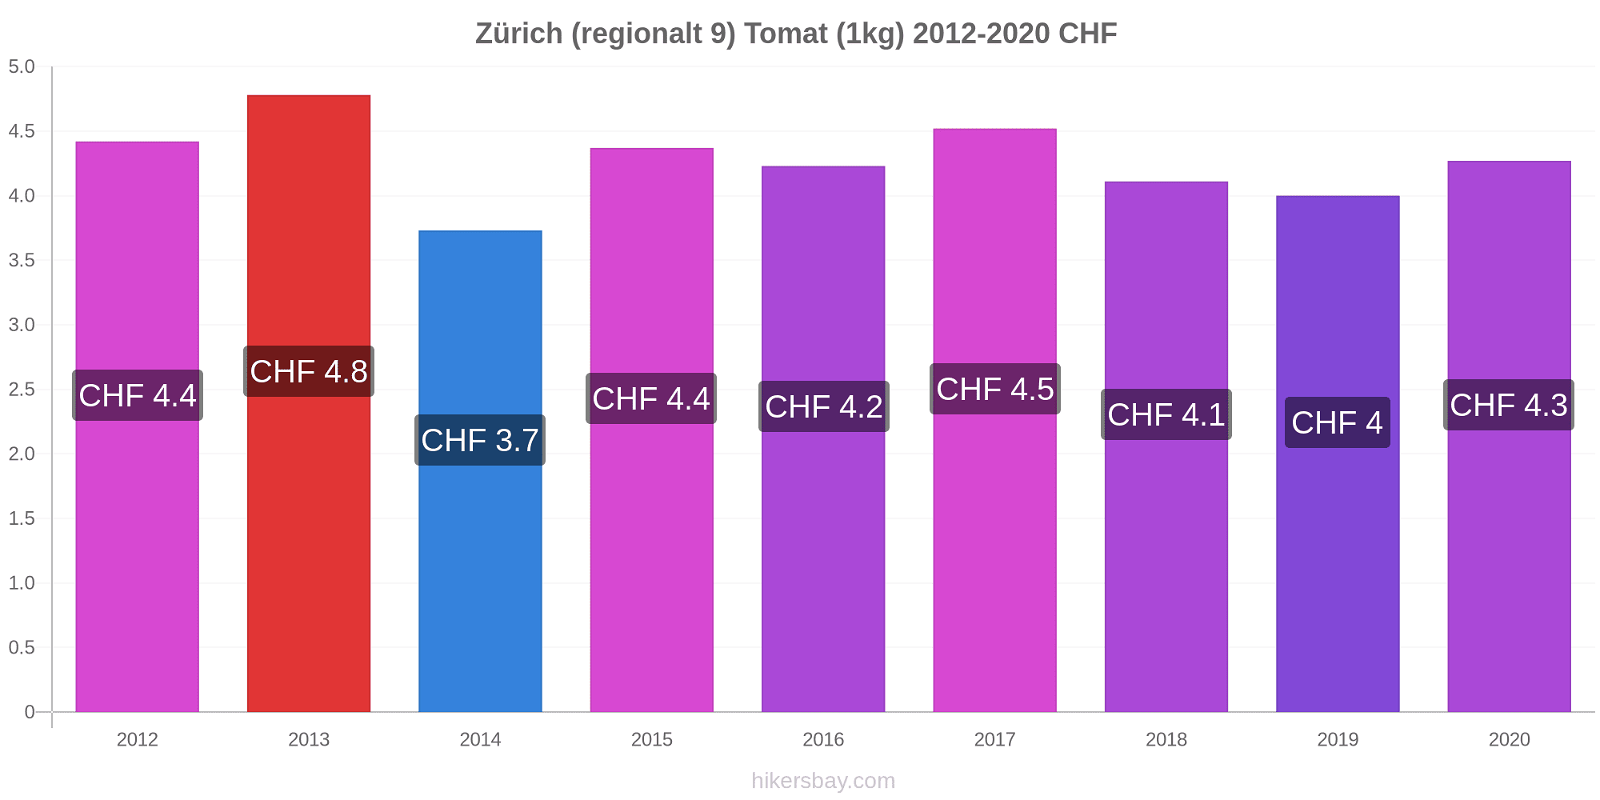 Zürich (regionalt 9) prisendringer Tomat (1kg) hikersbay.com